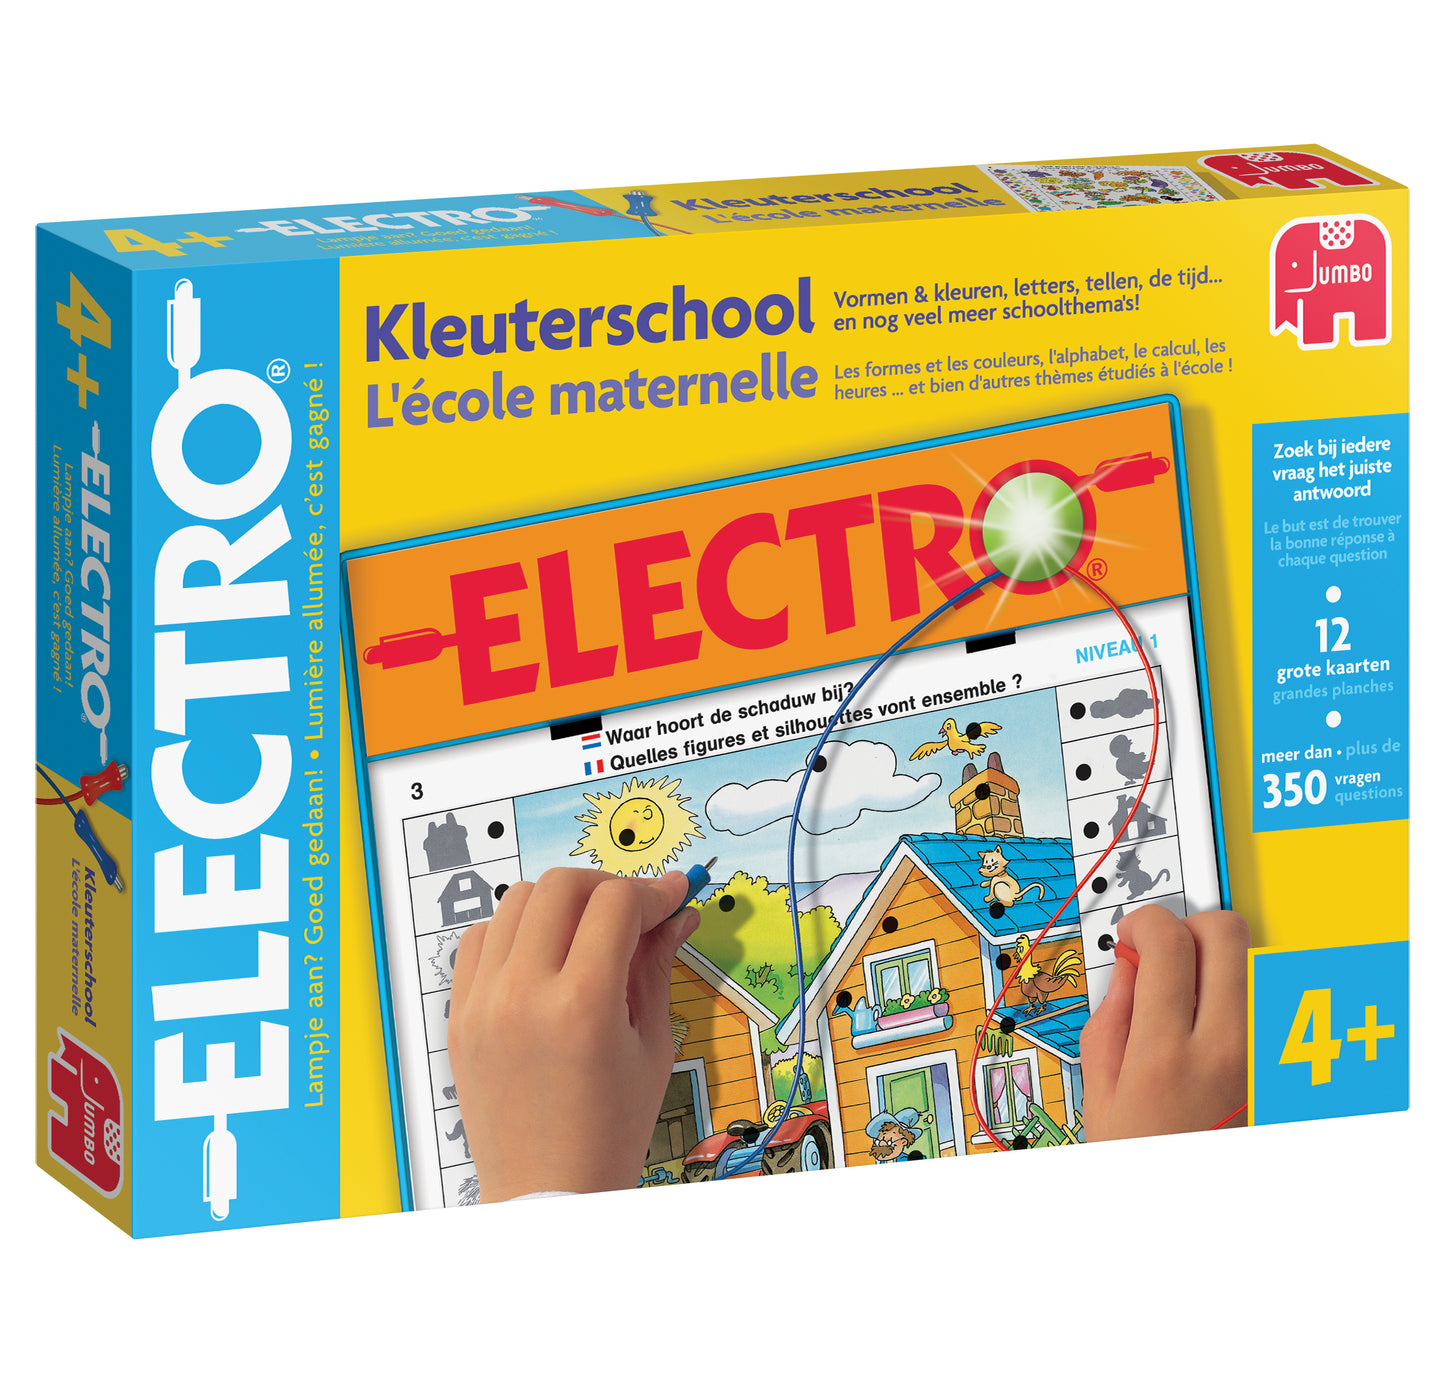 Electro Kleuterschool BE - product image - Jumboplay.com